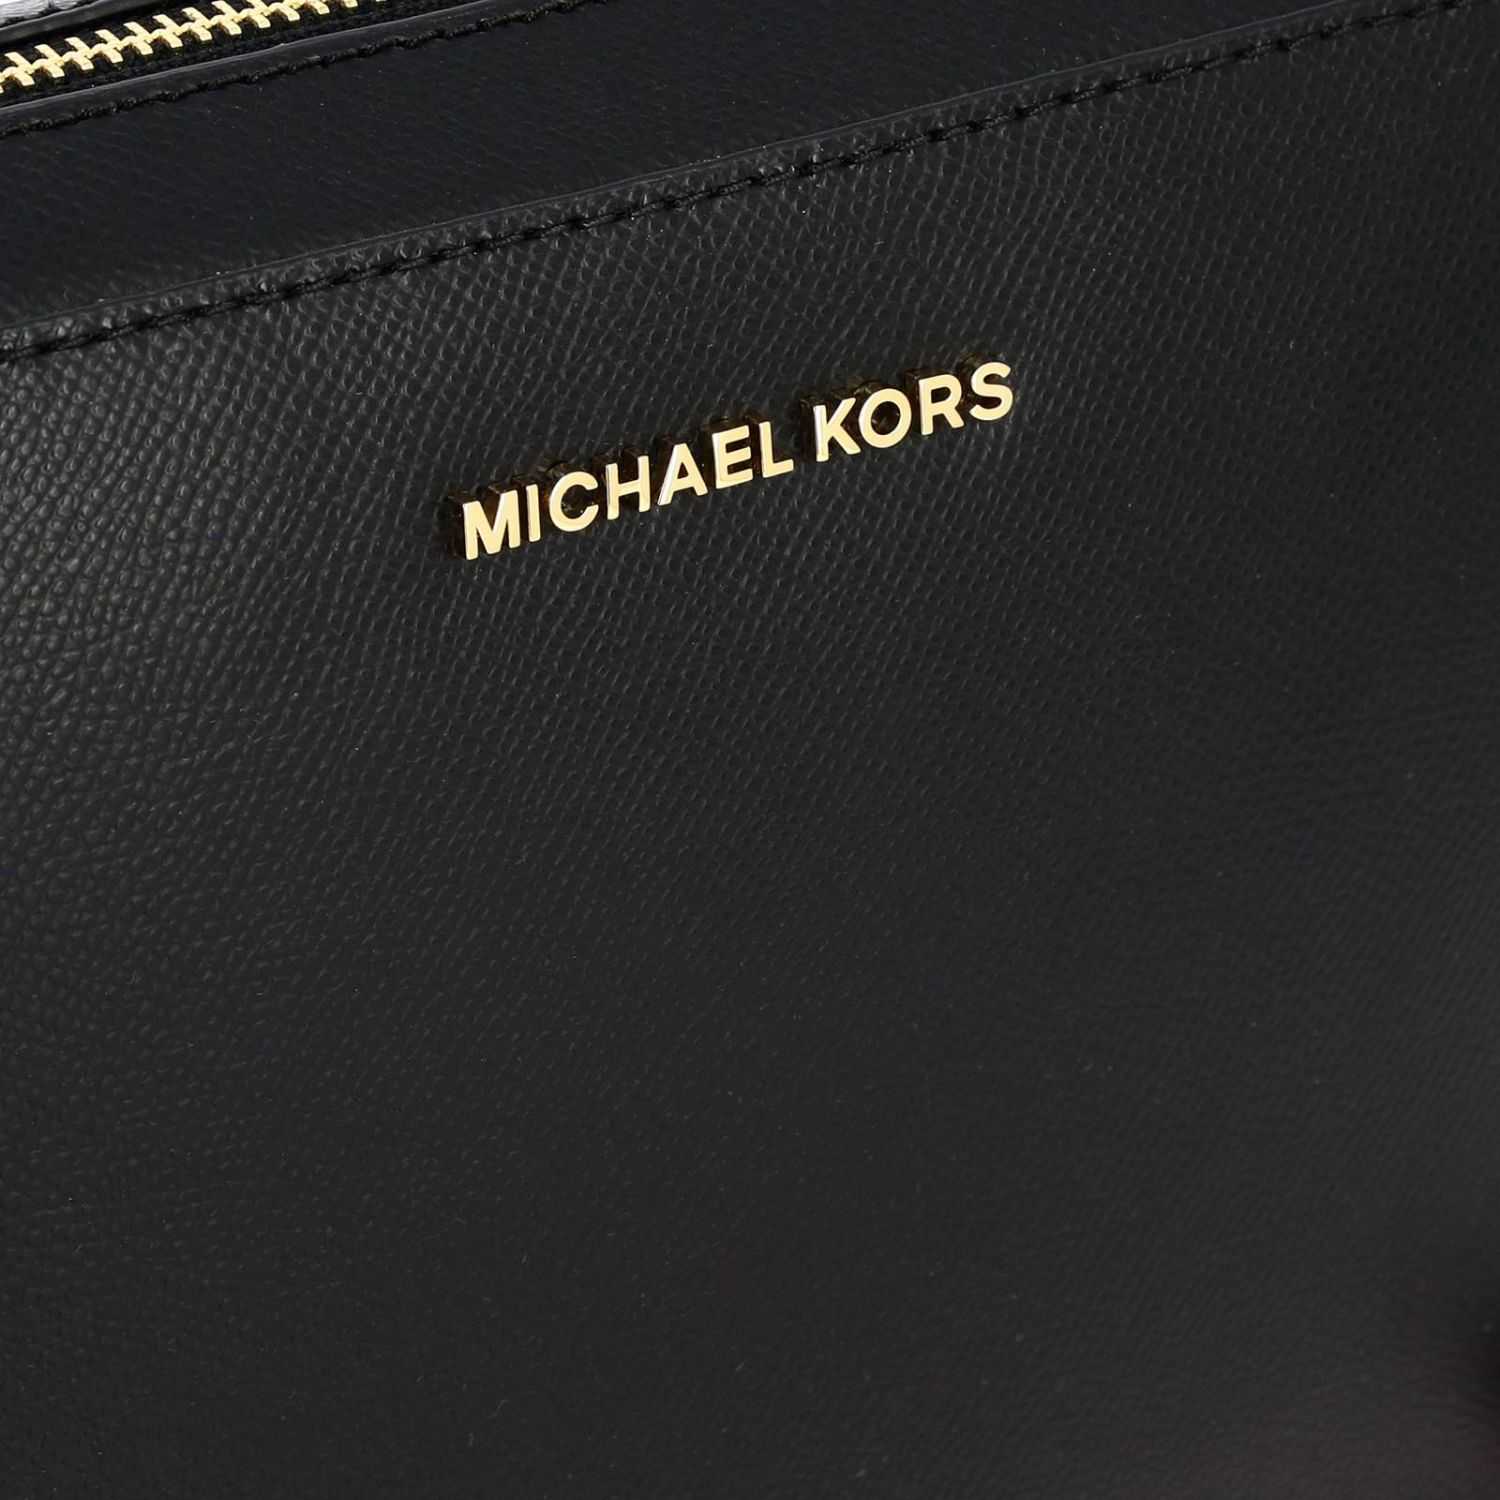 Michael Kors Outlet: Michael bag in leather - White  Michael Kors mini bag  32S3SJ6C1L online at